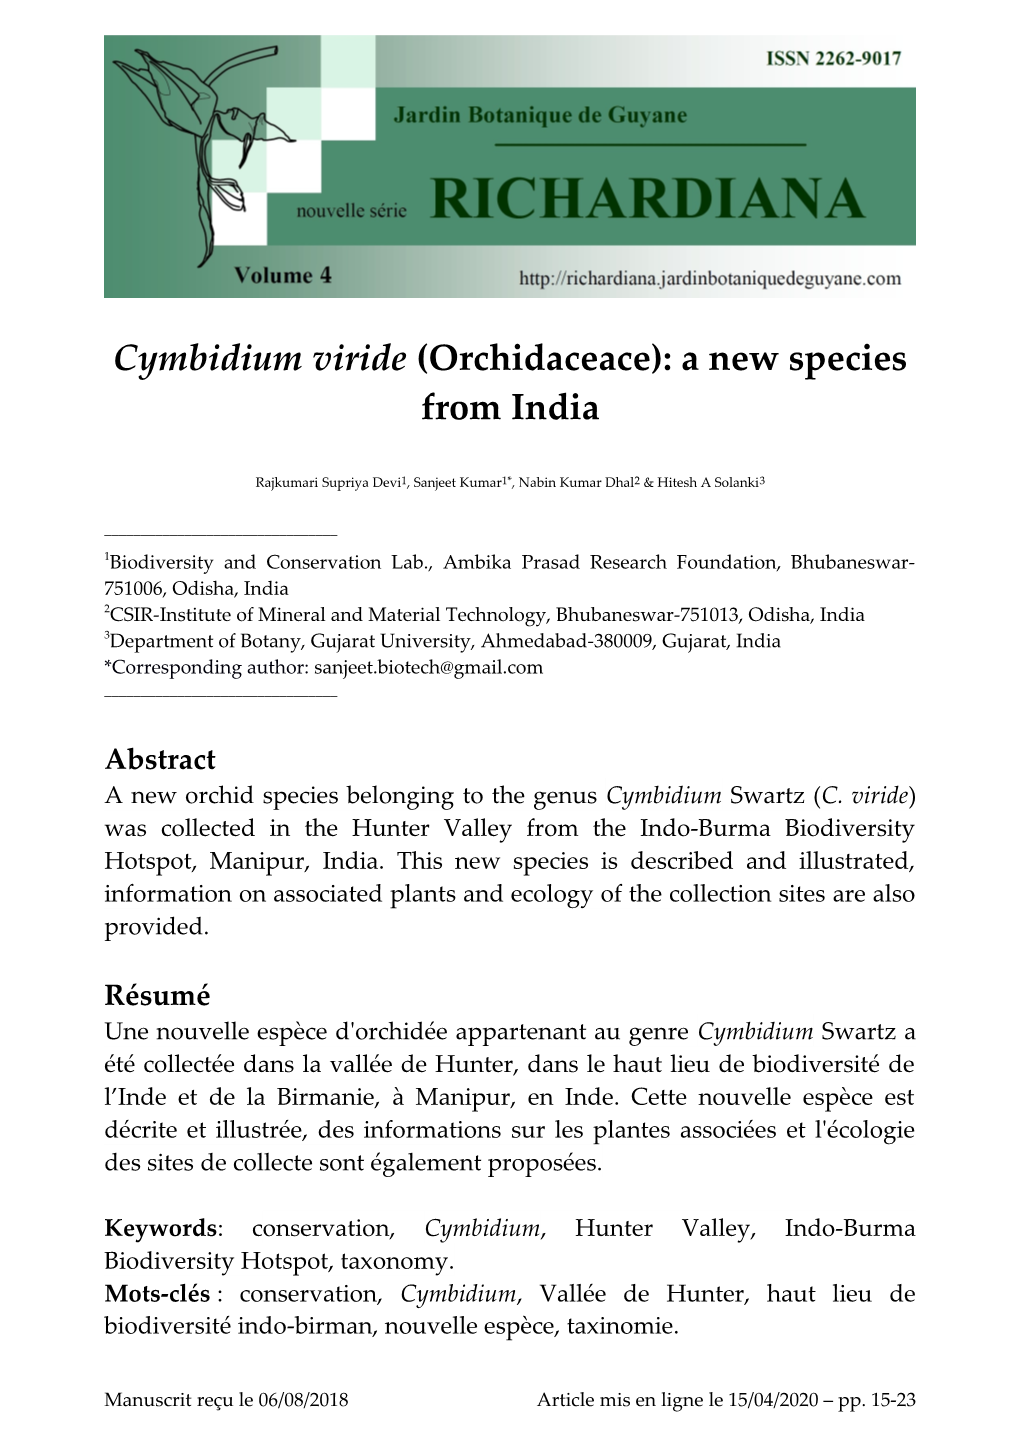 Cymbidium Viride (Orchidaceace): a New Species from India